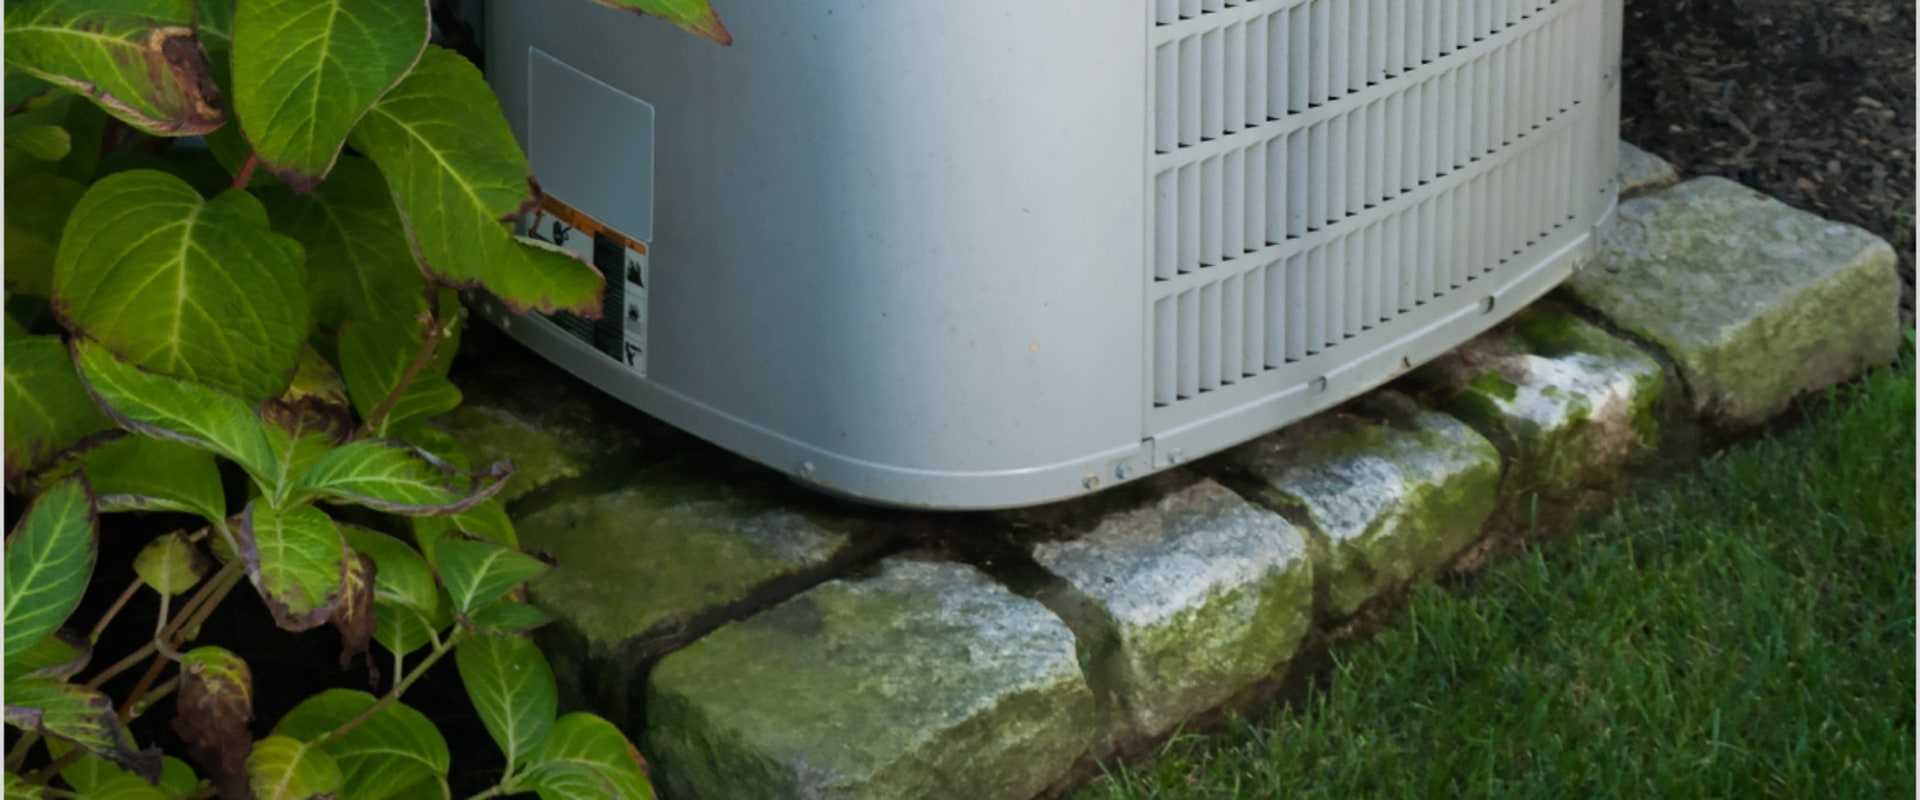 Improving Efficiency With 20x25x4 Air Filters Through HVAC Maintenance Service Near Miami FL